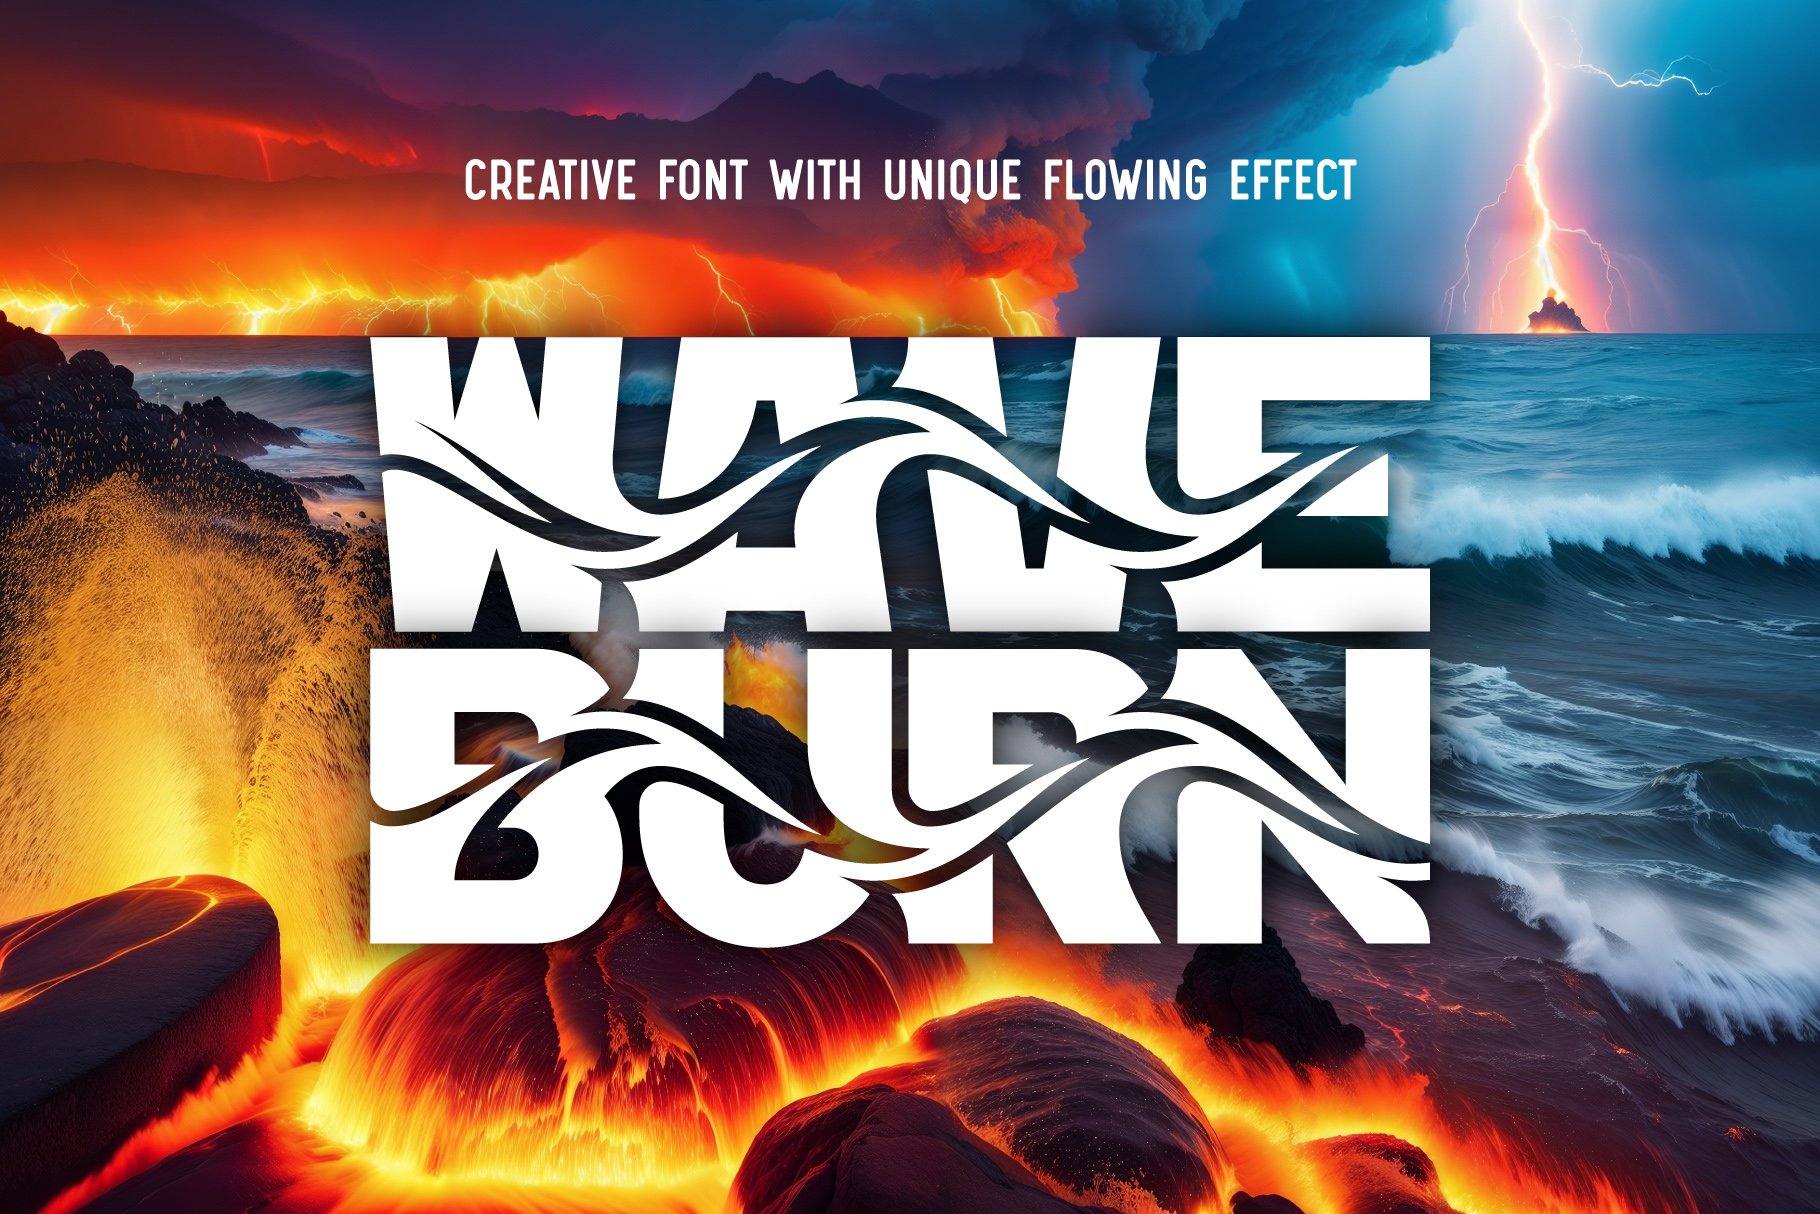 Wave Burn - Creative Font cover image.